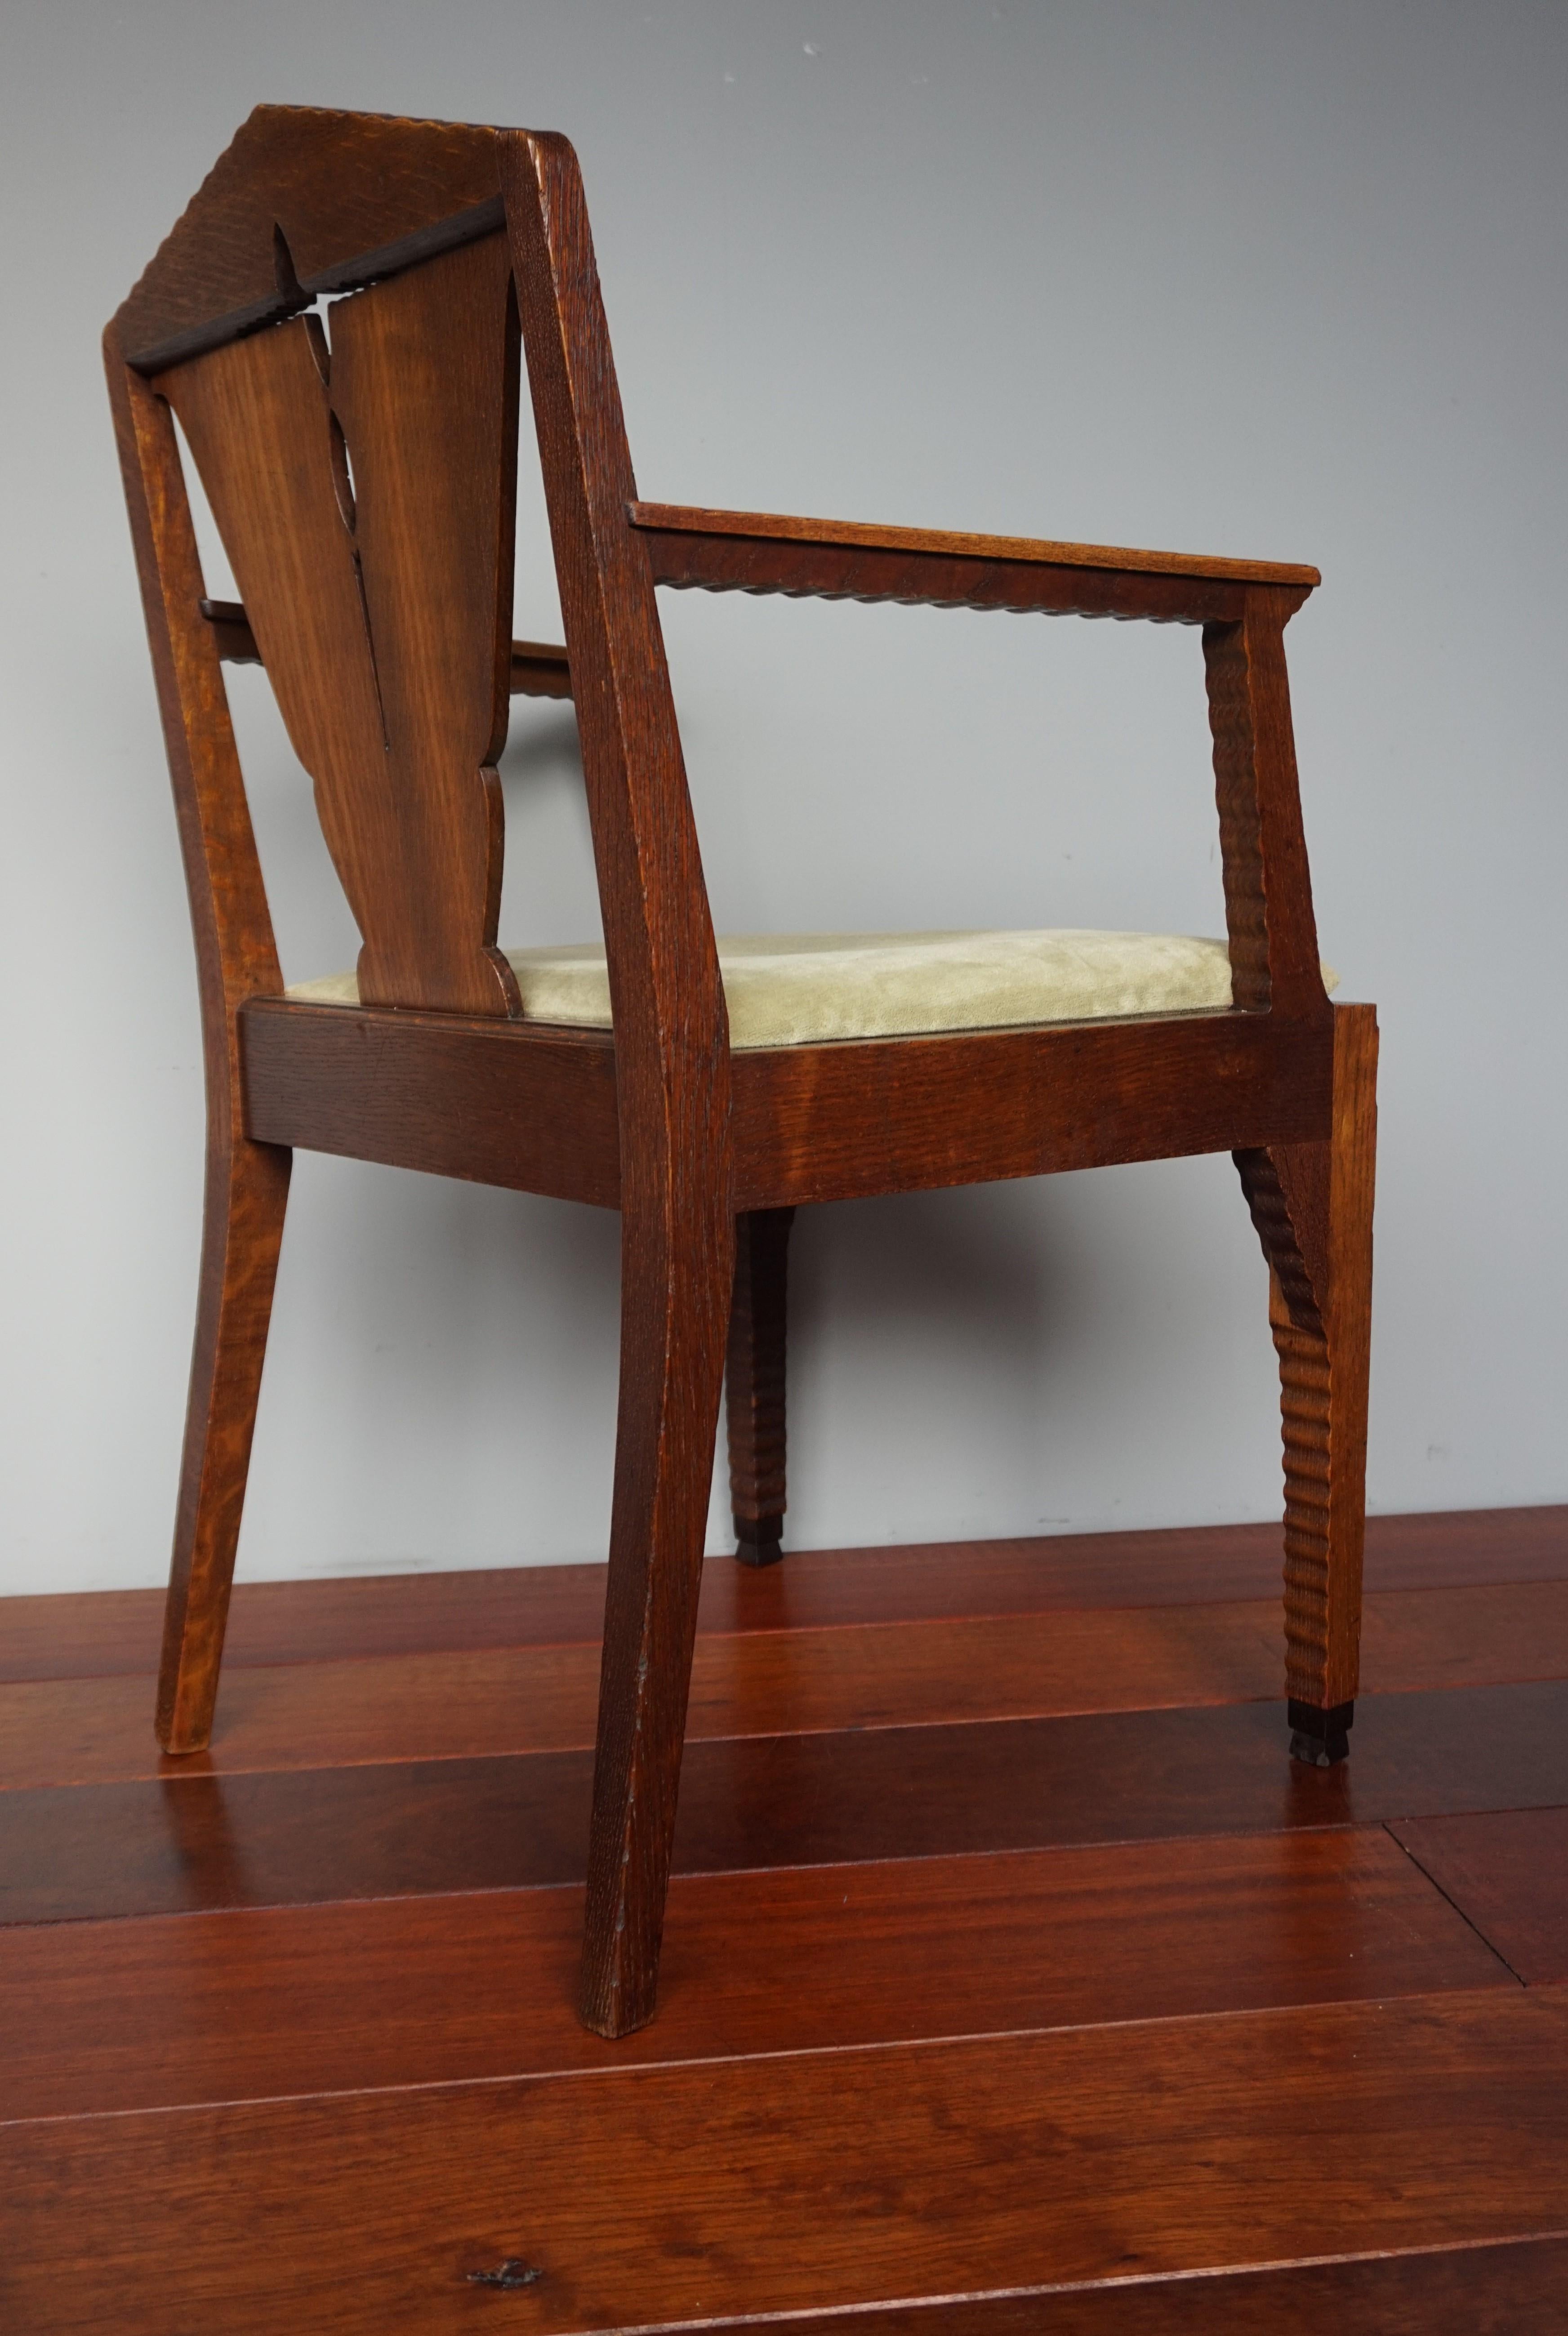 Brilliant Design Dutch Arts & Crafts Oak Desk Chair w. Original Upholstery 1910s For Sale 8